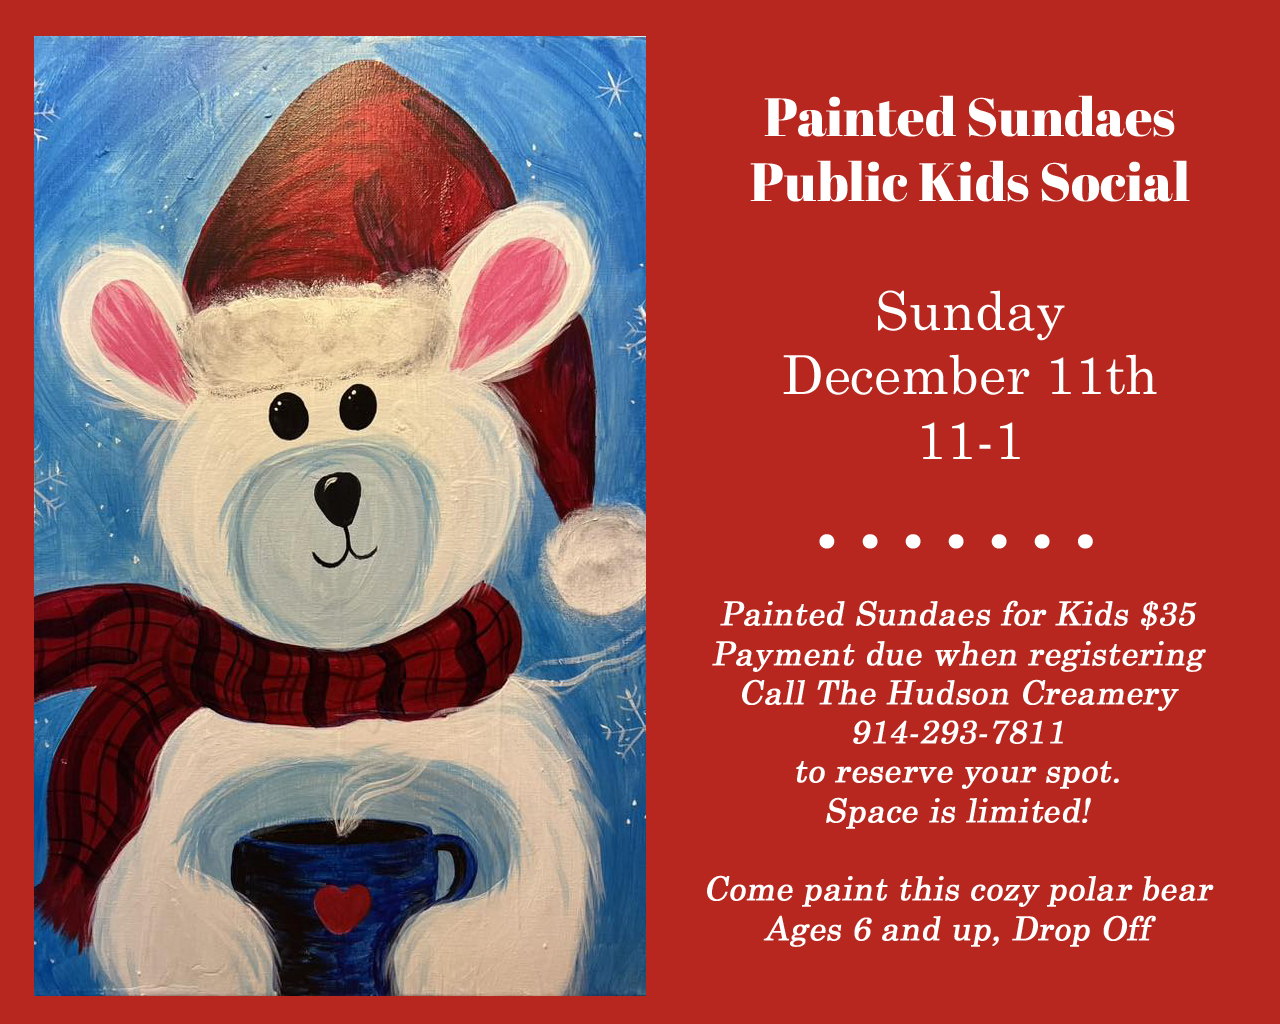 Painted Sundaes Public Kids Social